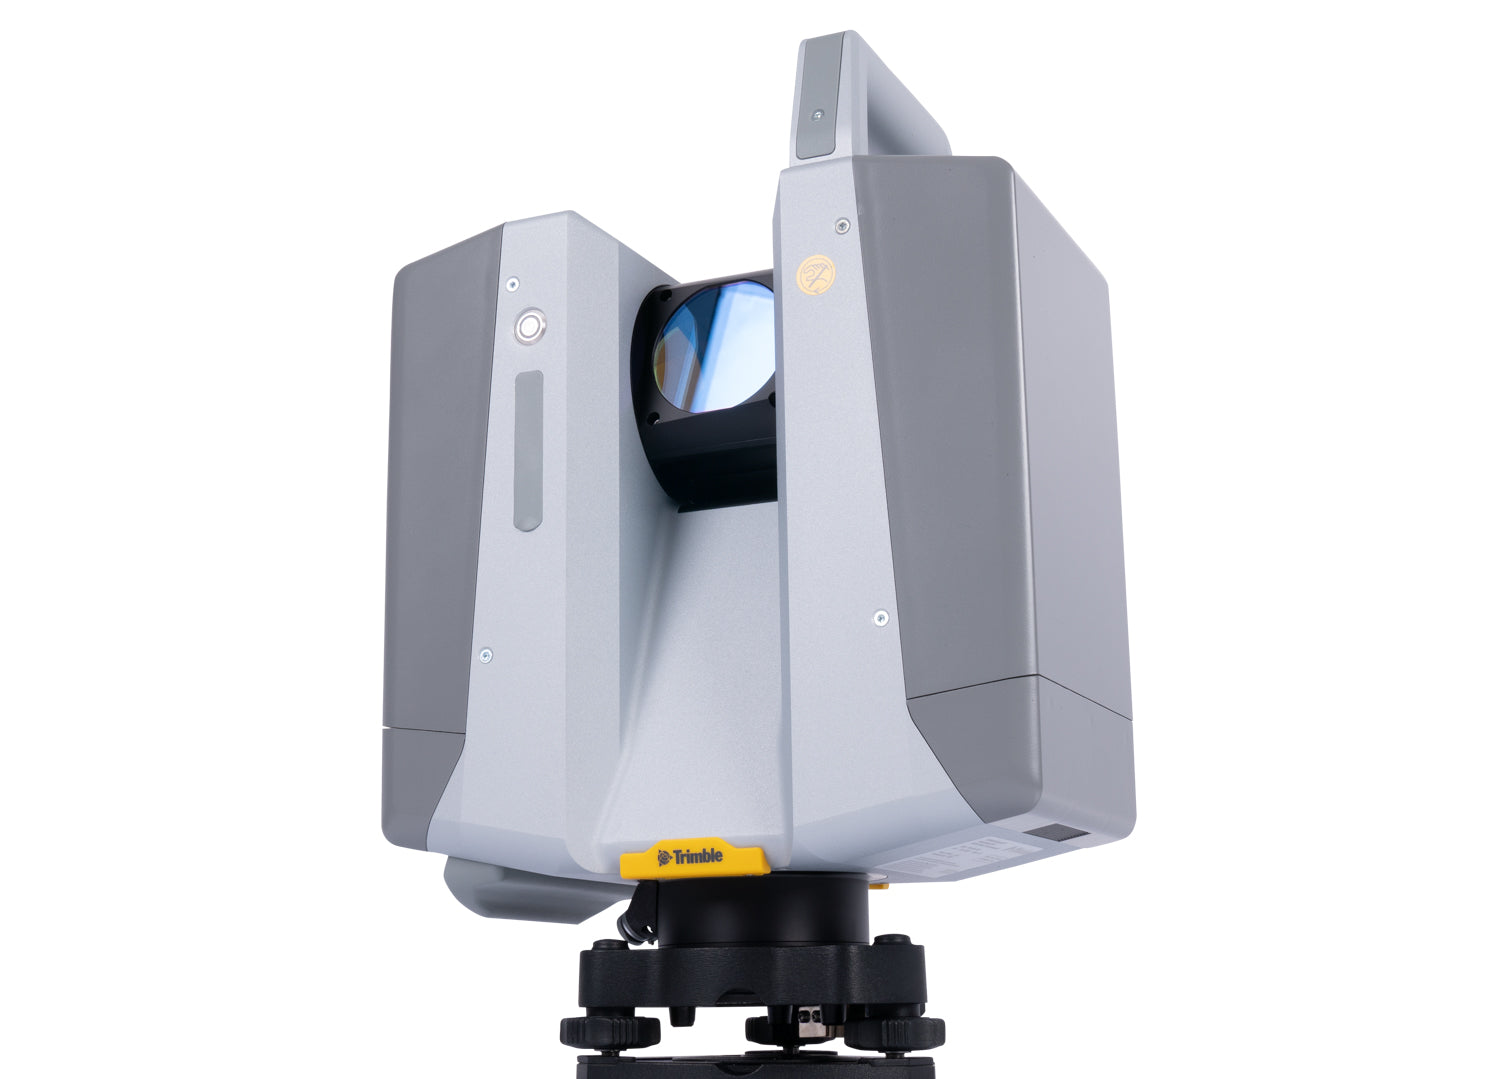 Trimble X12 3D Laser Scanning System